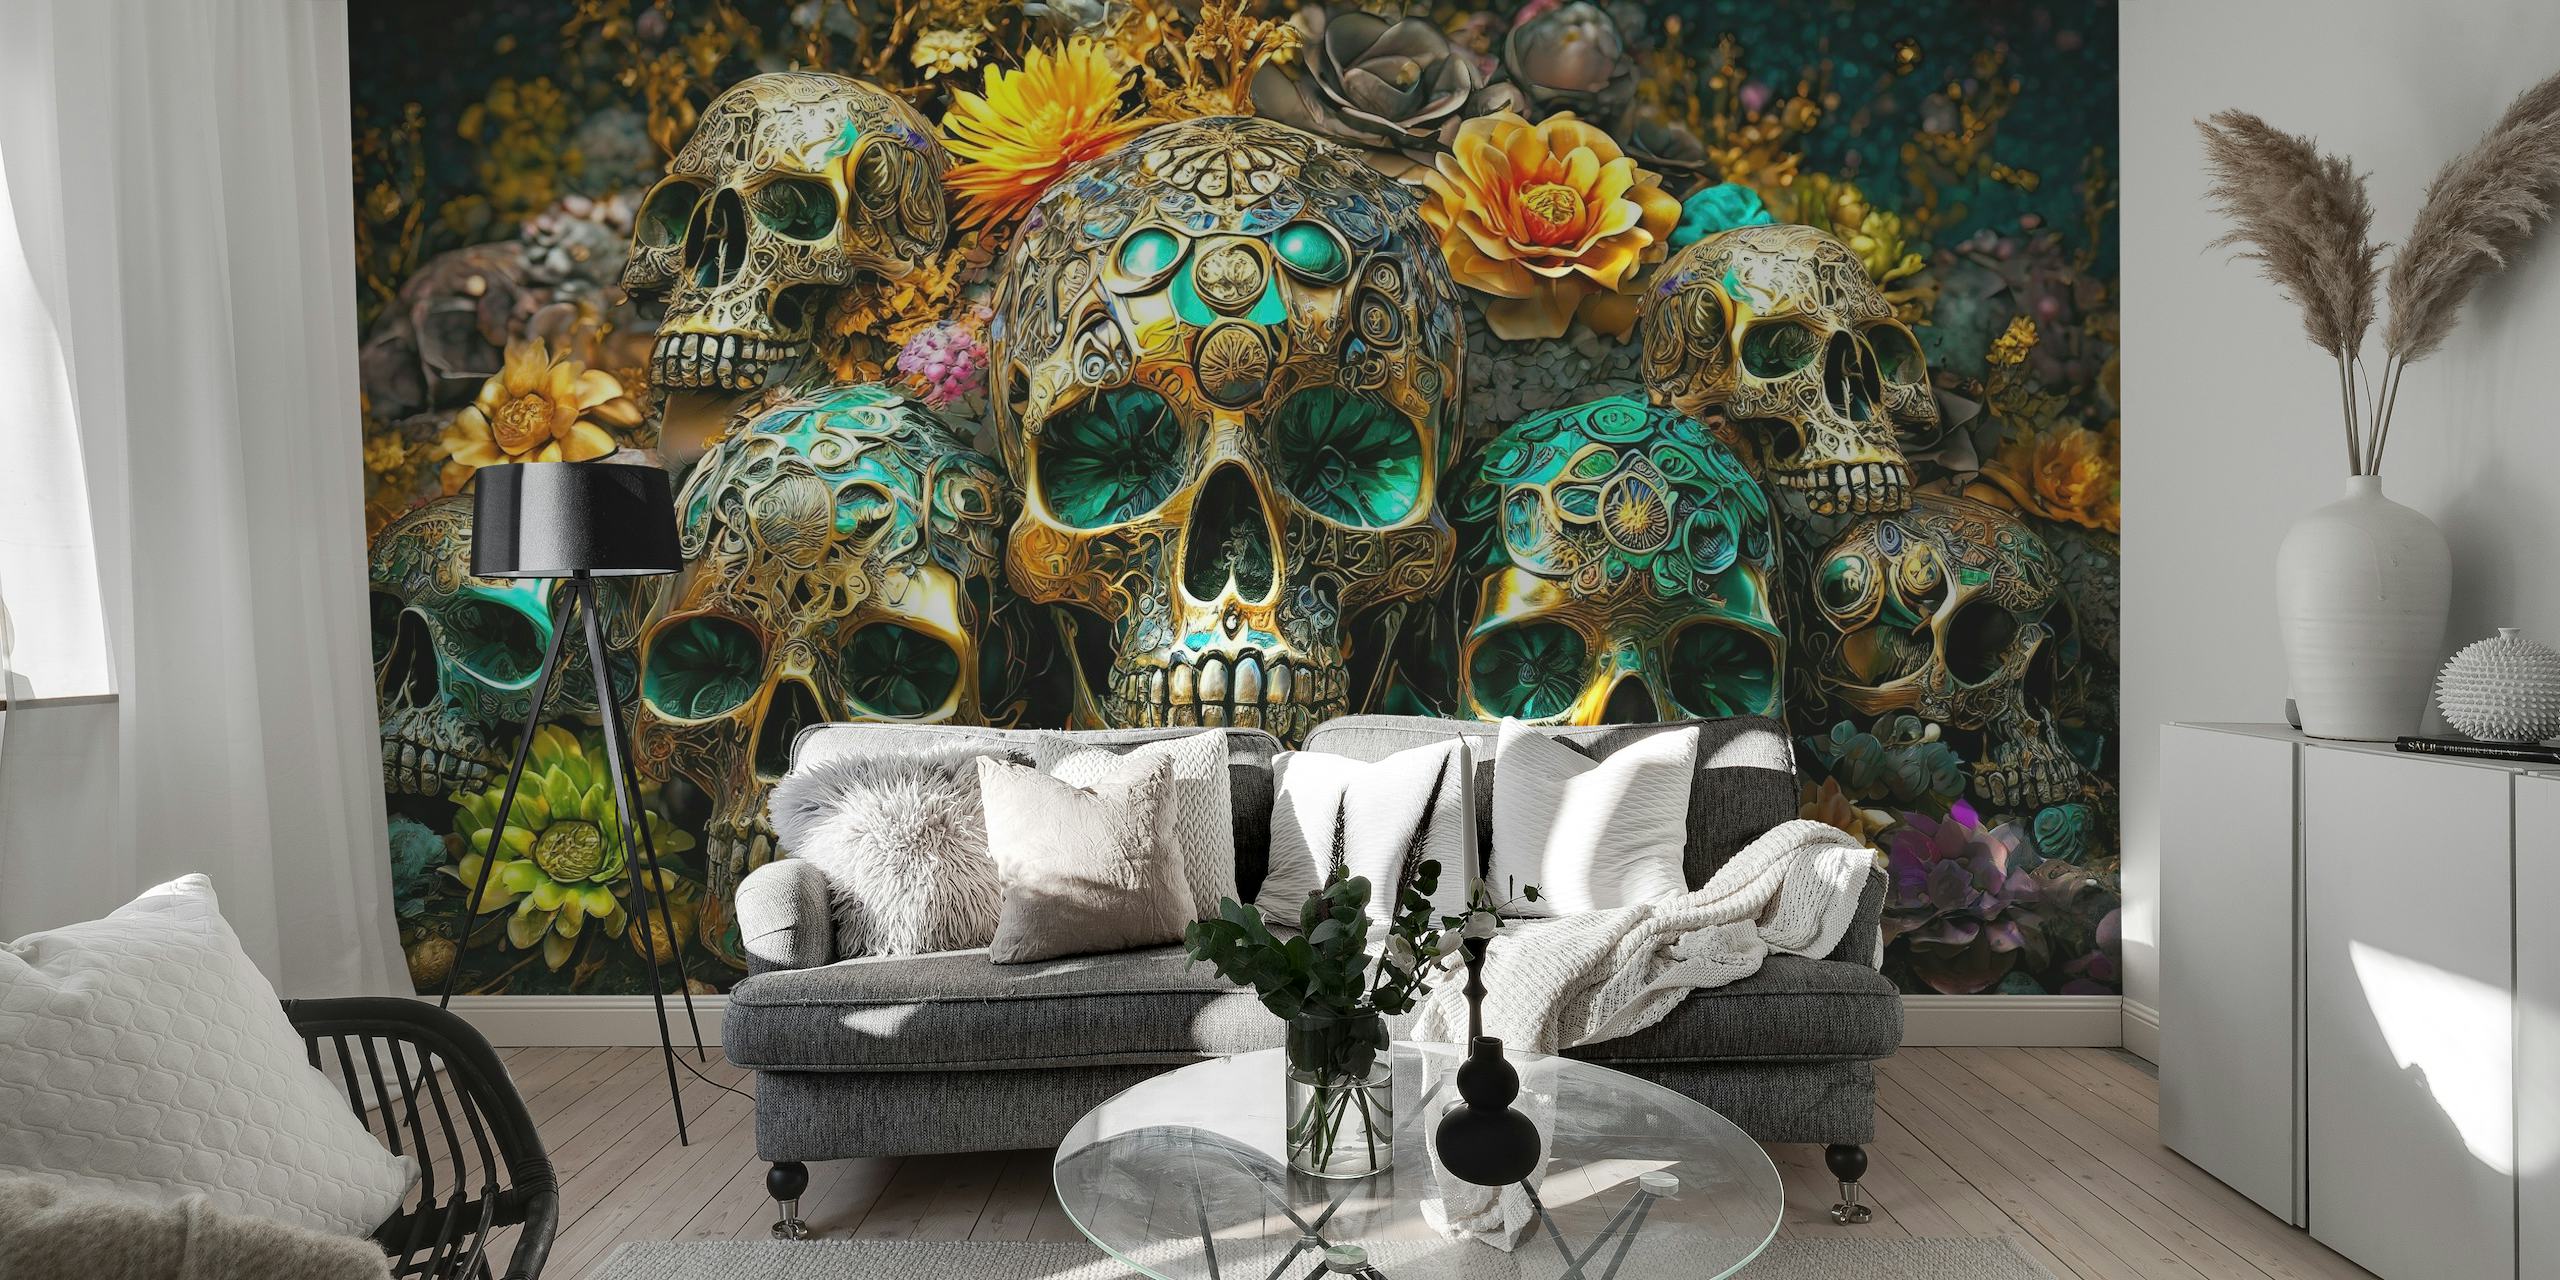 Día de Muertos wall mural featuring decorated skulls and marigolds